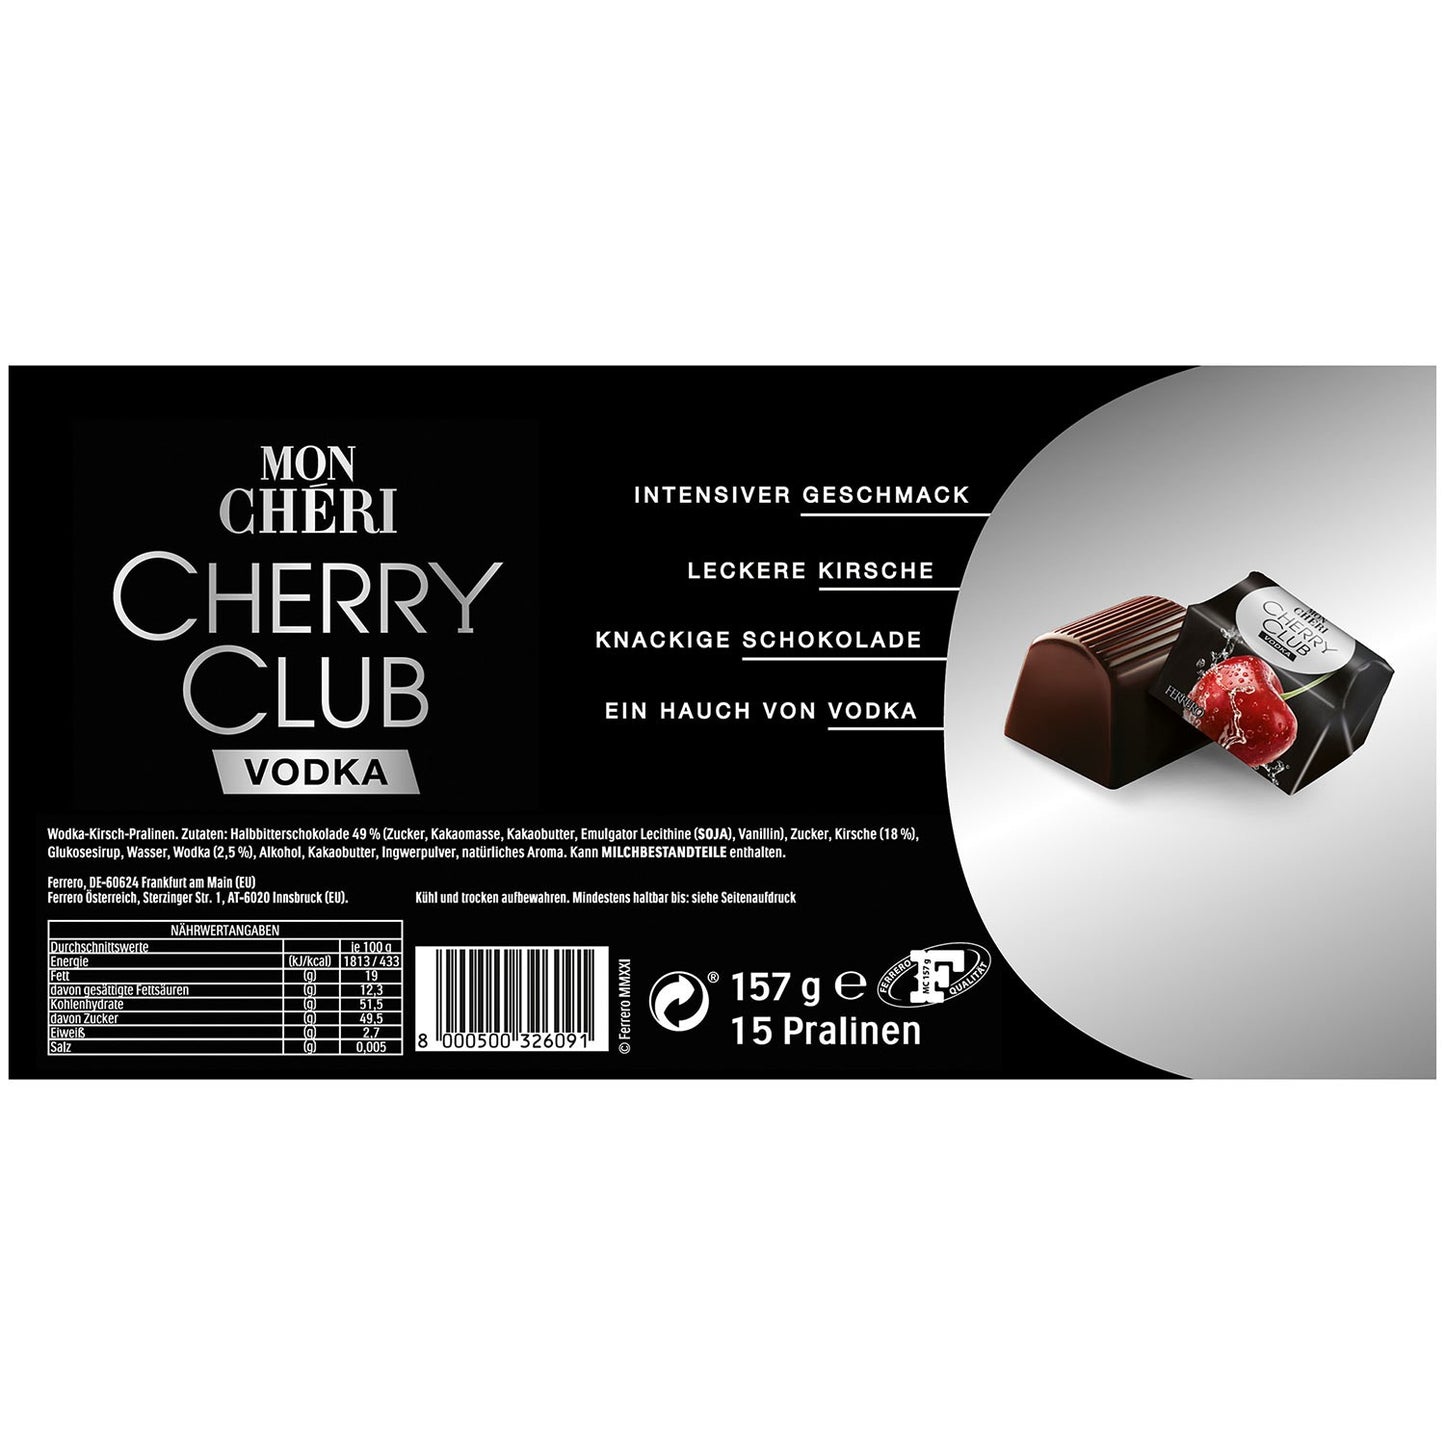 Ferrero Mon Chéri Cherry Club Vodka 15 pieces 157g